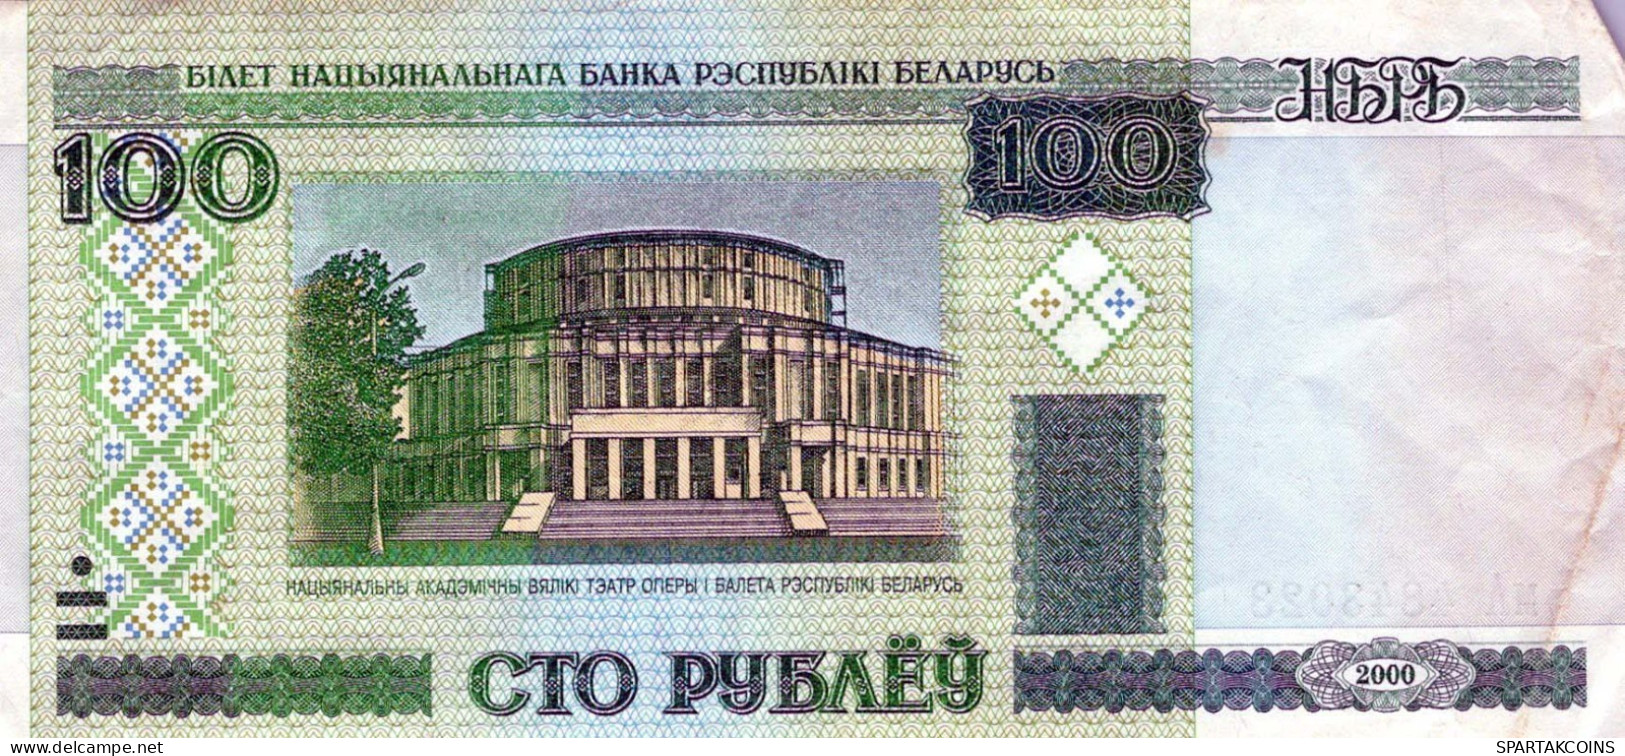 100 RUBLES 2000 BELARUS Papiergeld Banknote #PK599 - [11] Lokale Uitgaven